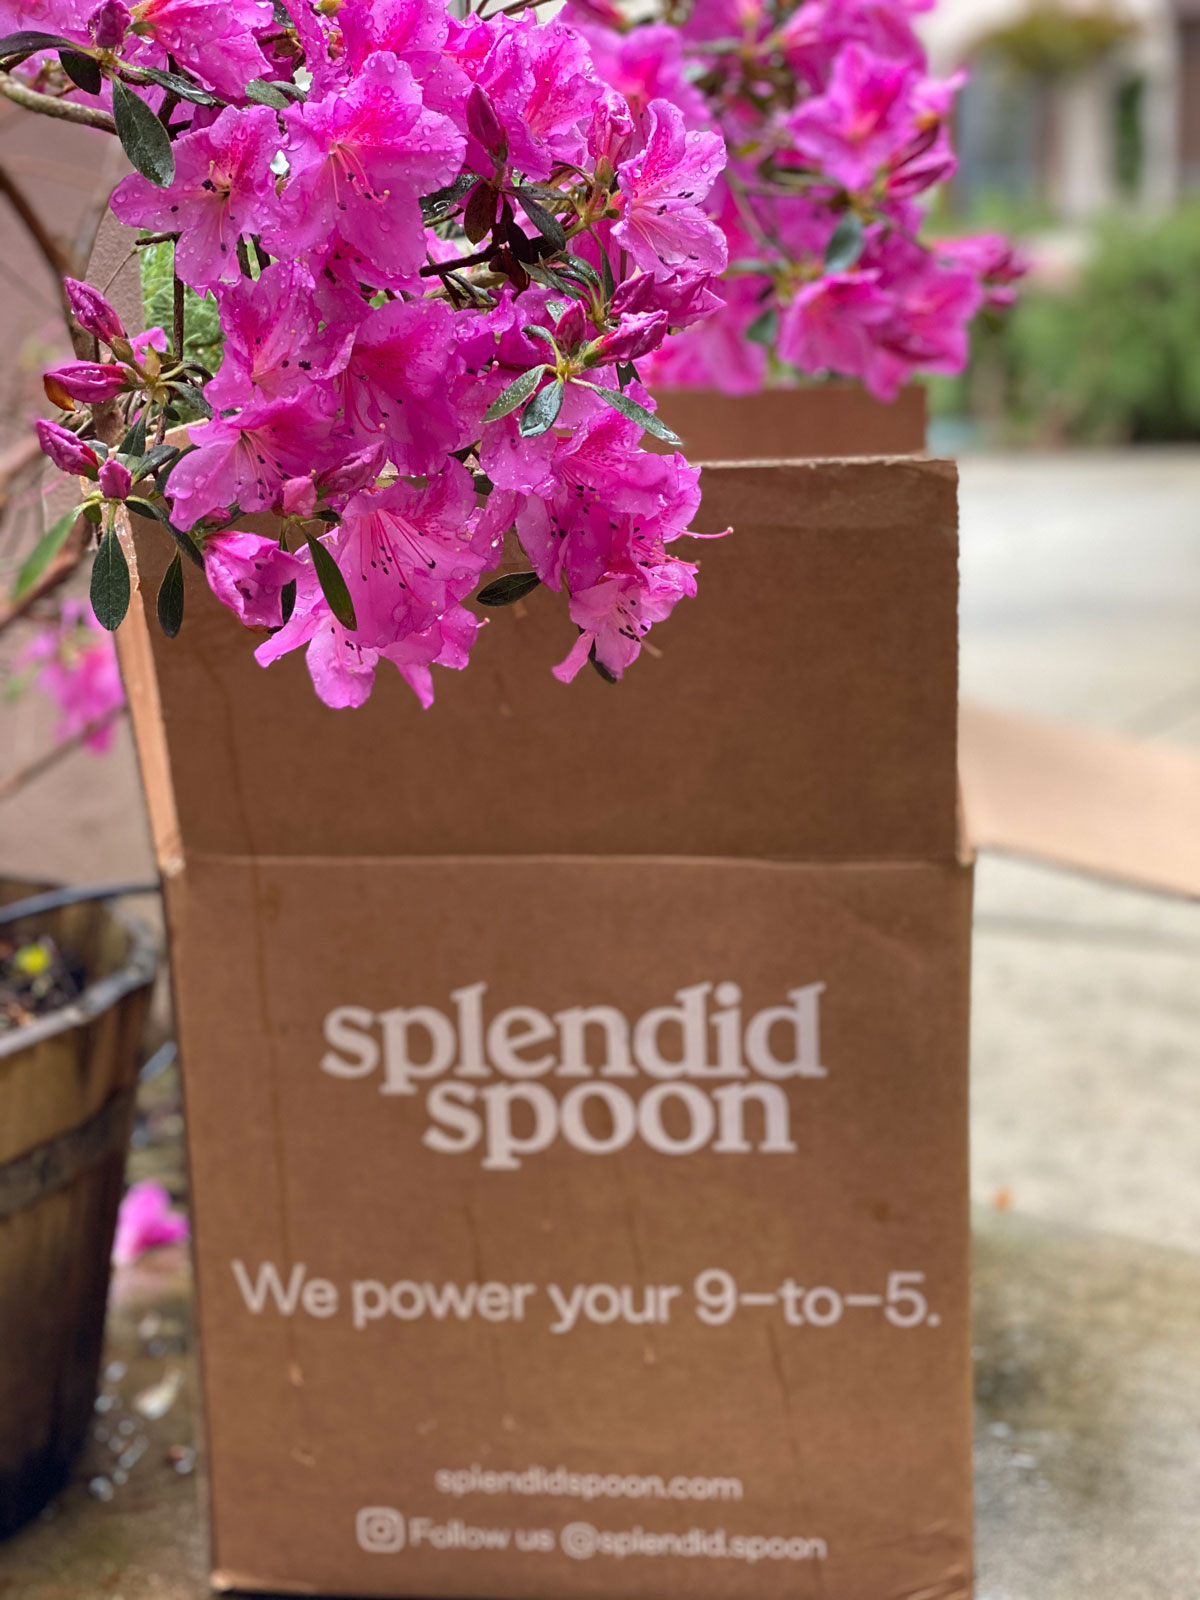 Splendid Spoon Deals 20off